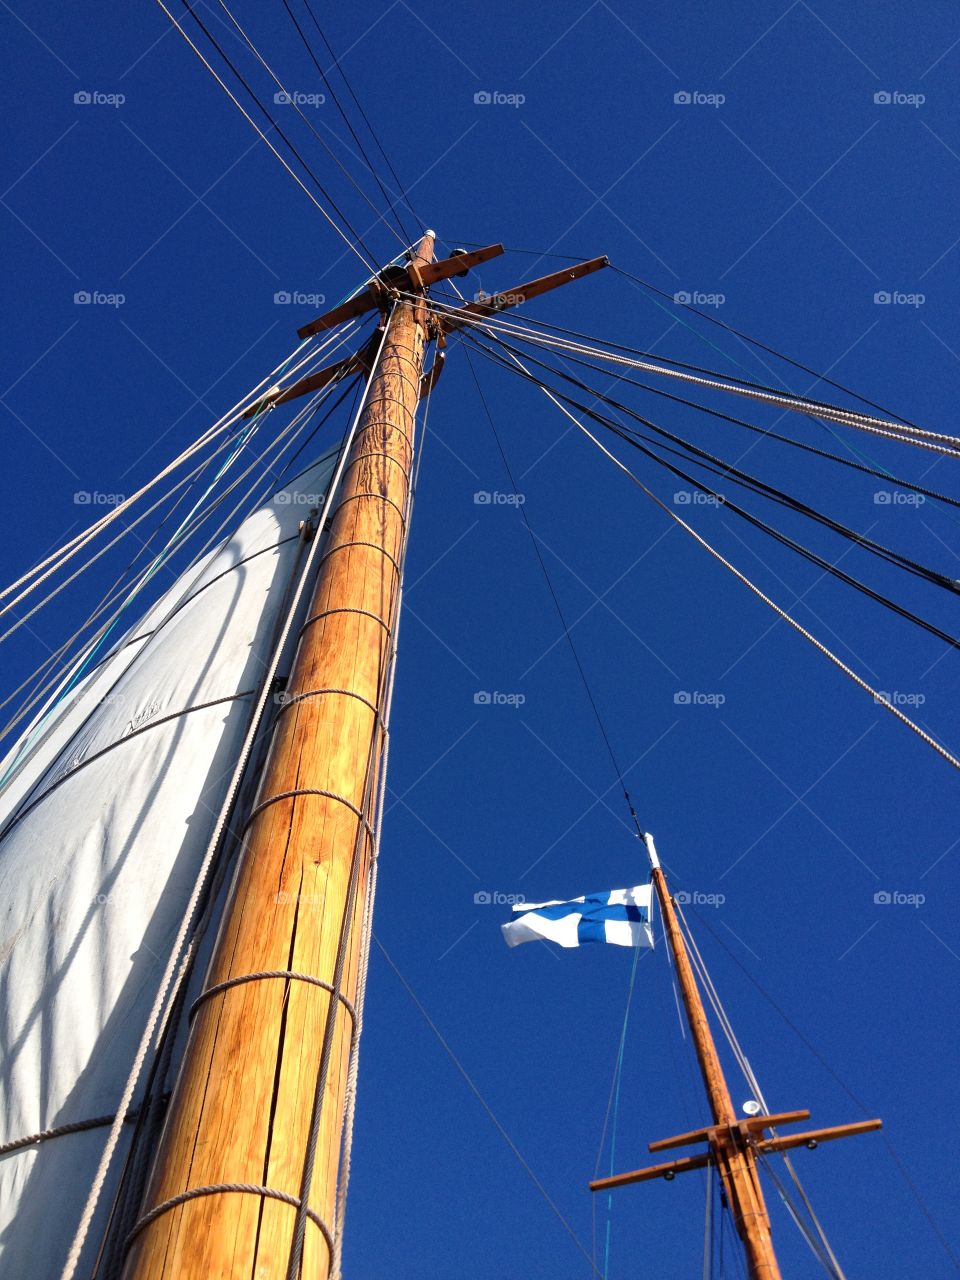 The masts. Sail ship masts and finnish flag